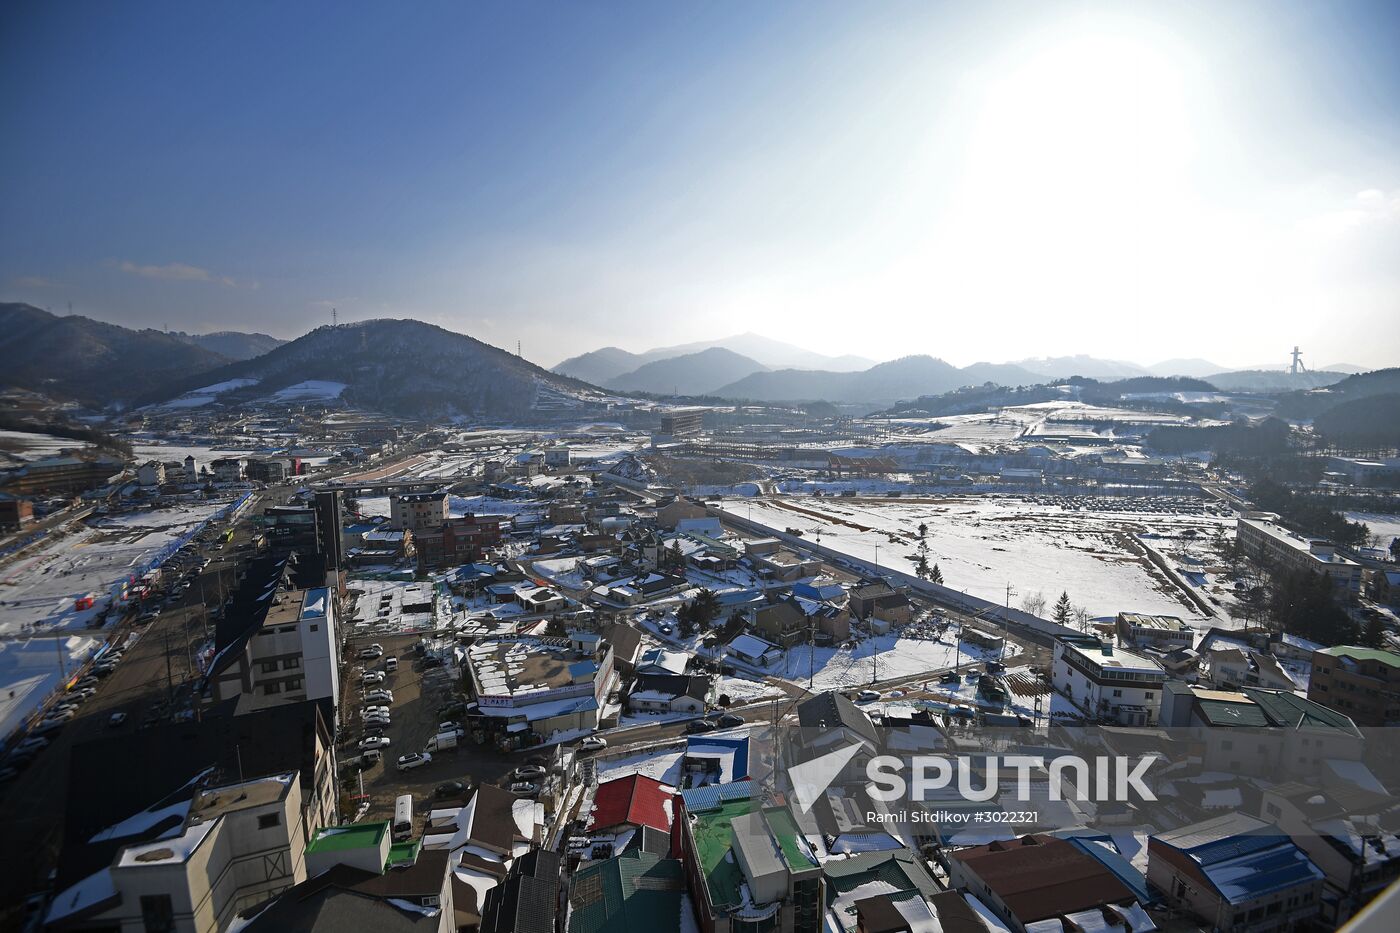 Cities of the world. Pyeongchang